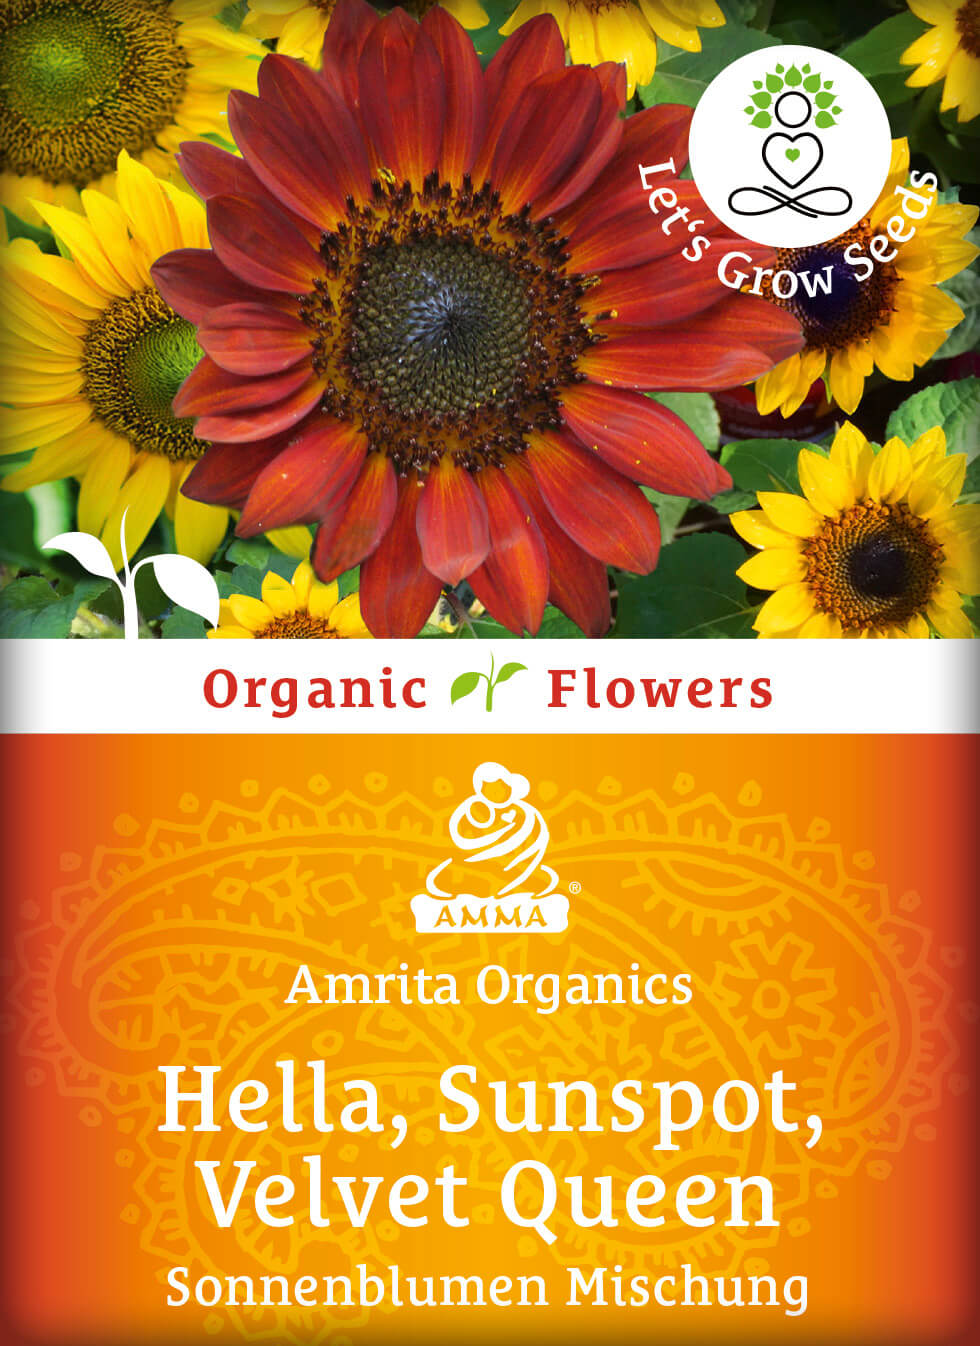 Sunflower-mix, organic